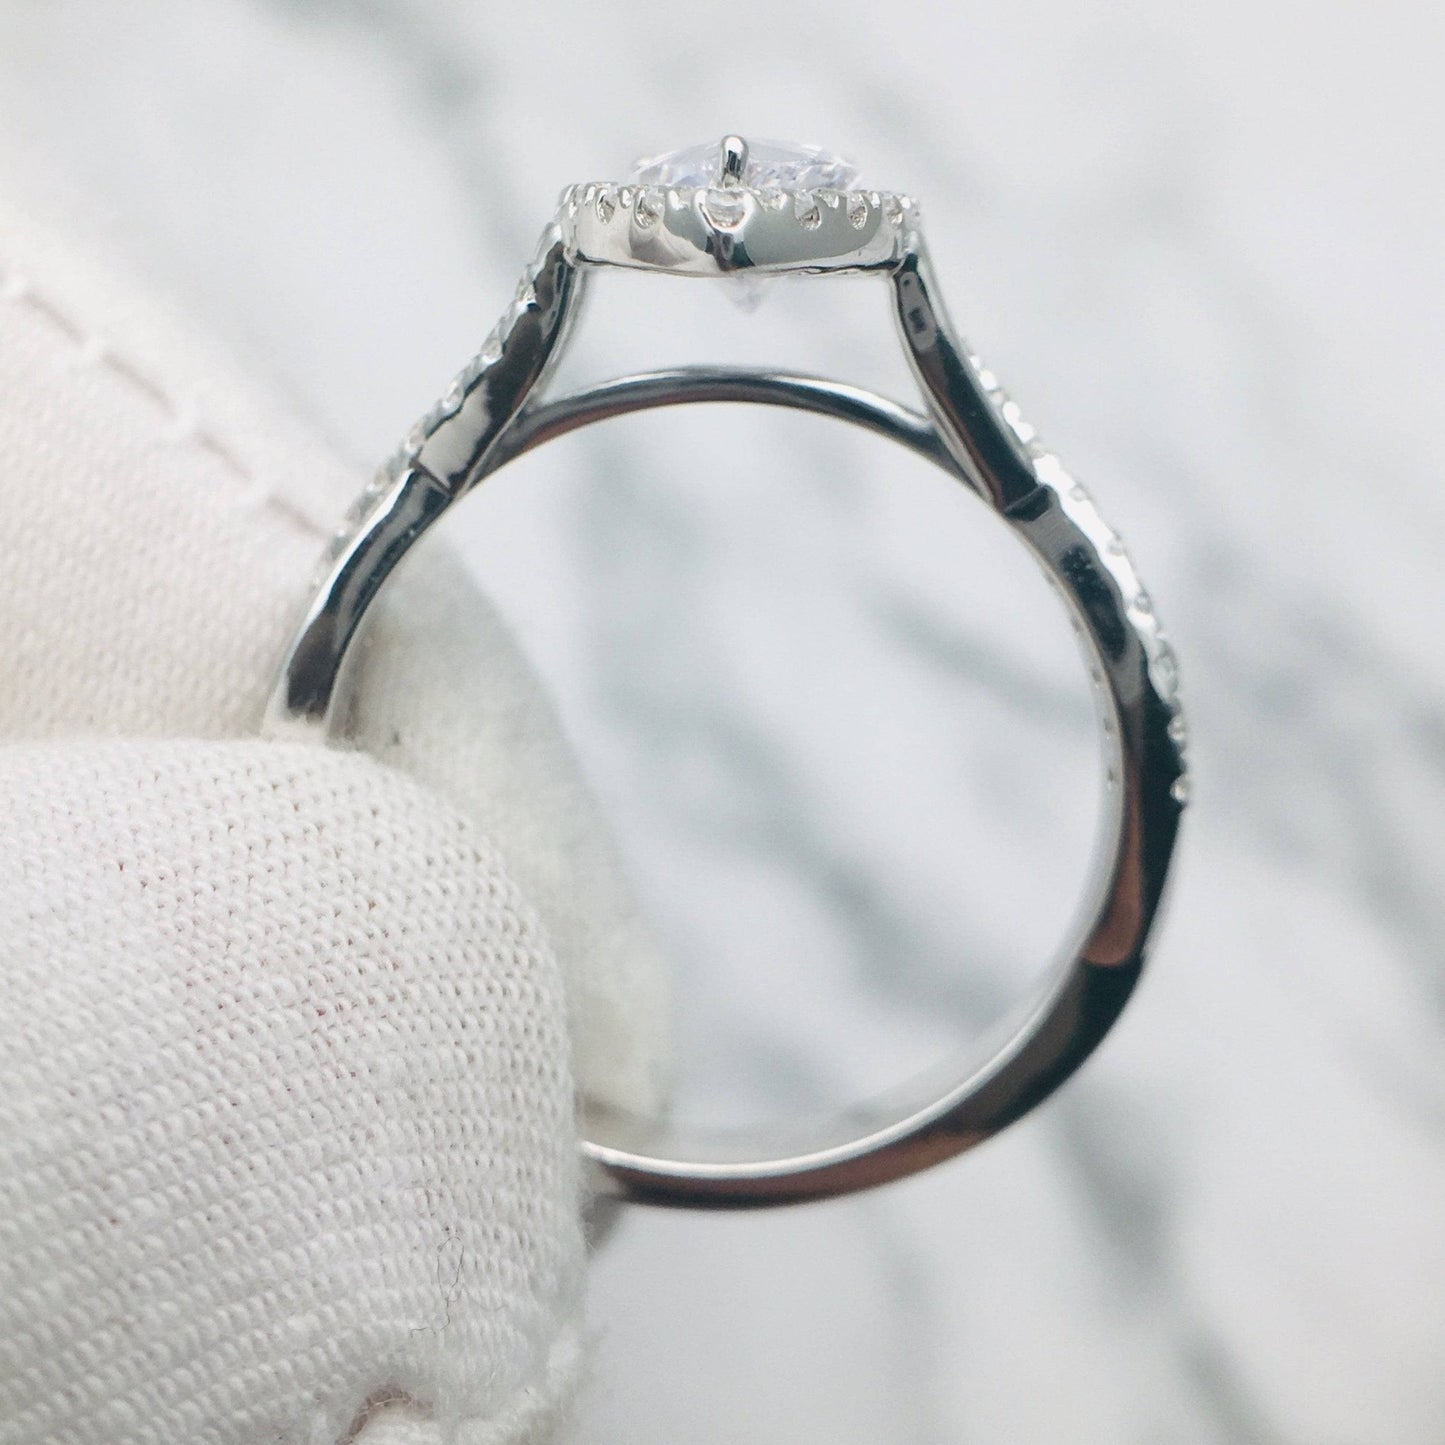 Classic Halo Pear Cut Moissanite Engagement Ring - Black Diamonds New York